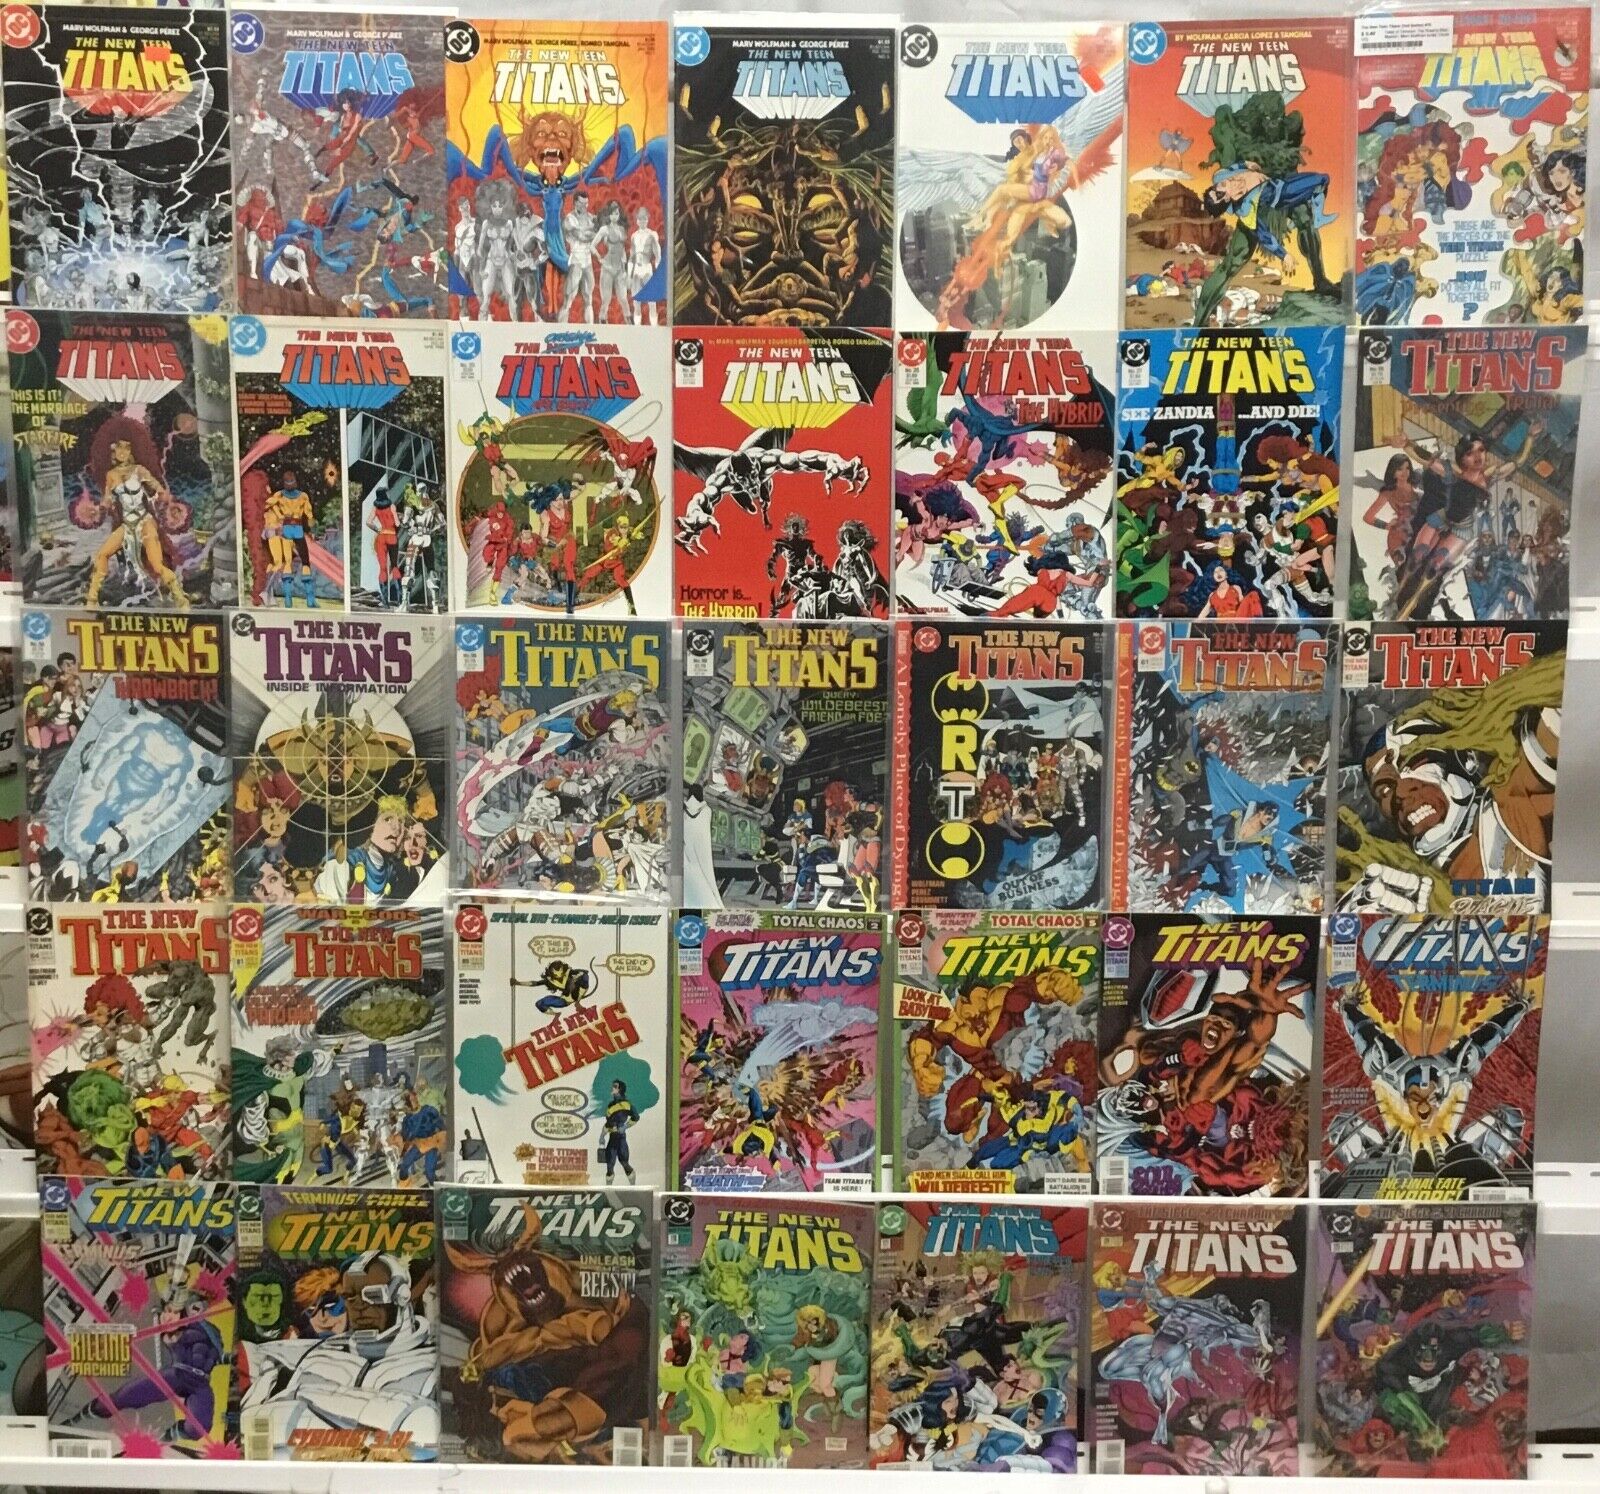 DC Comics - The New Teen Titans / New Titans - Comic Book Lot of 35 Issues